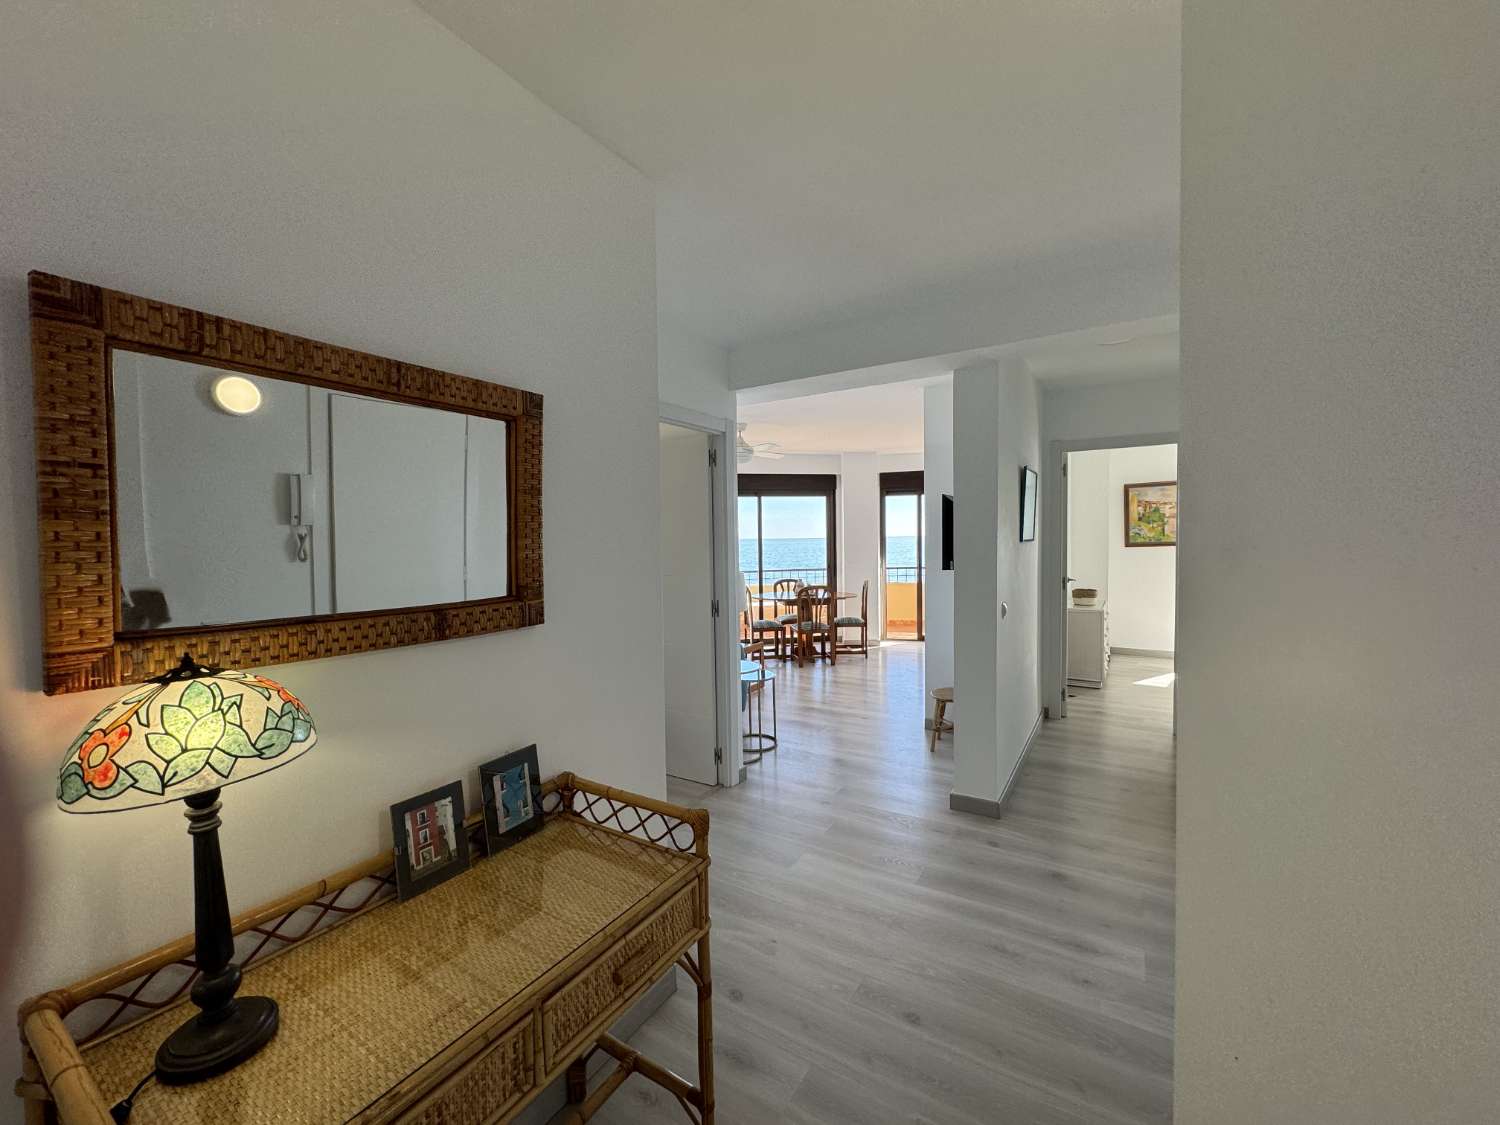 "Renovated Seaside Home in Fuengirola: Your Perfect Coastal Retreat"